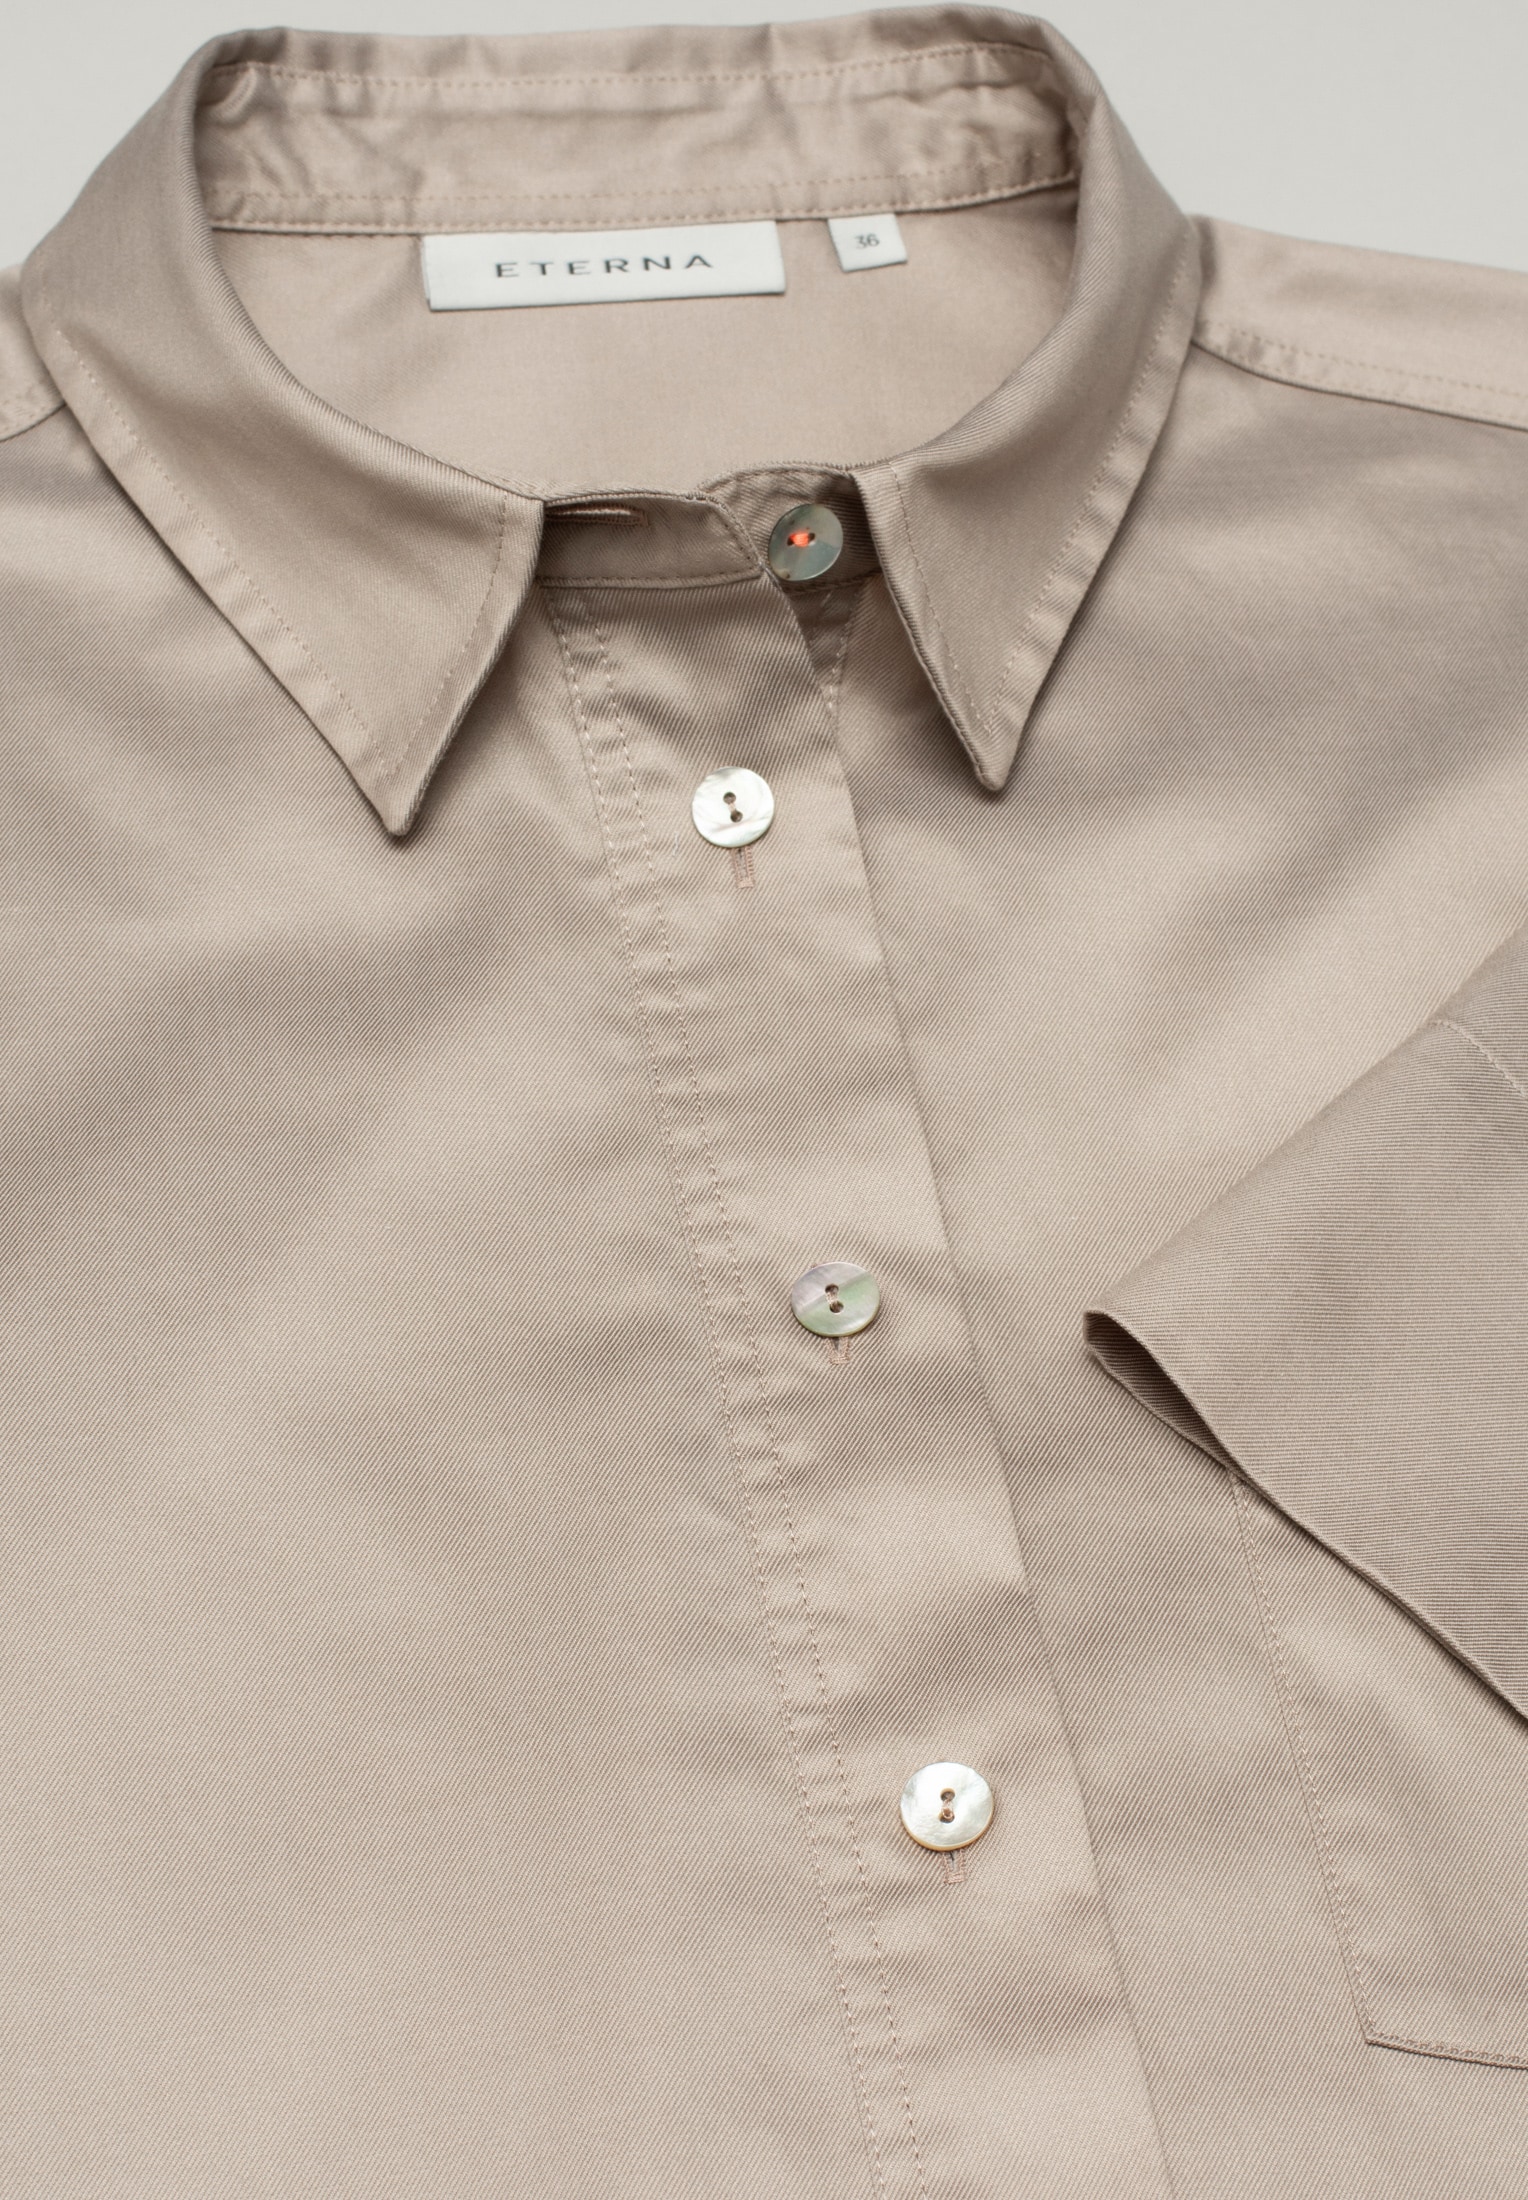 grün 42 | 2DR00234-04-01-42-1/2 | Kurzarm | in | Shirt grün unifarben Bluse Luxury Soft